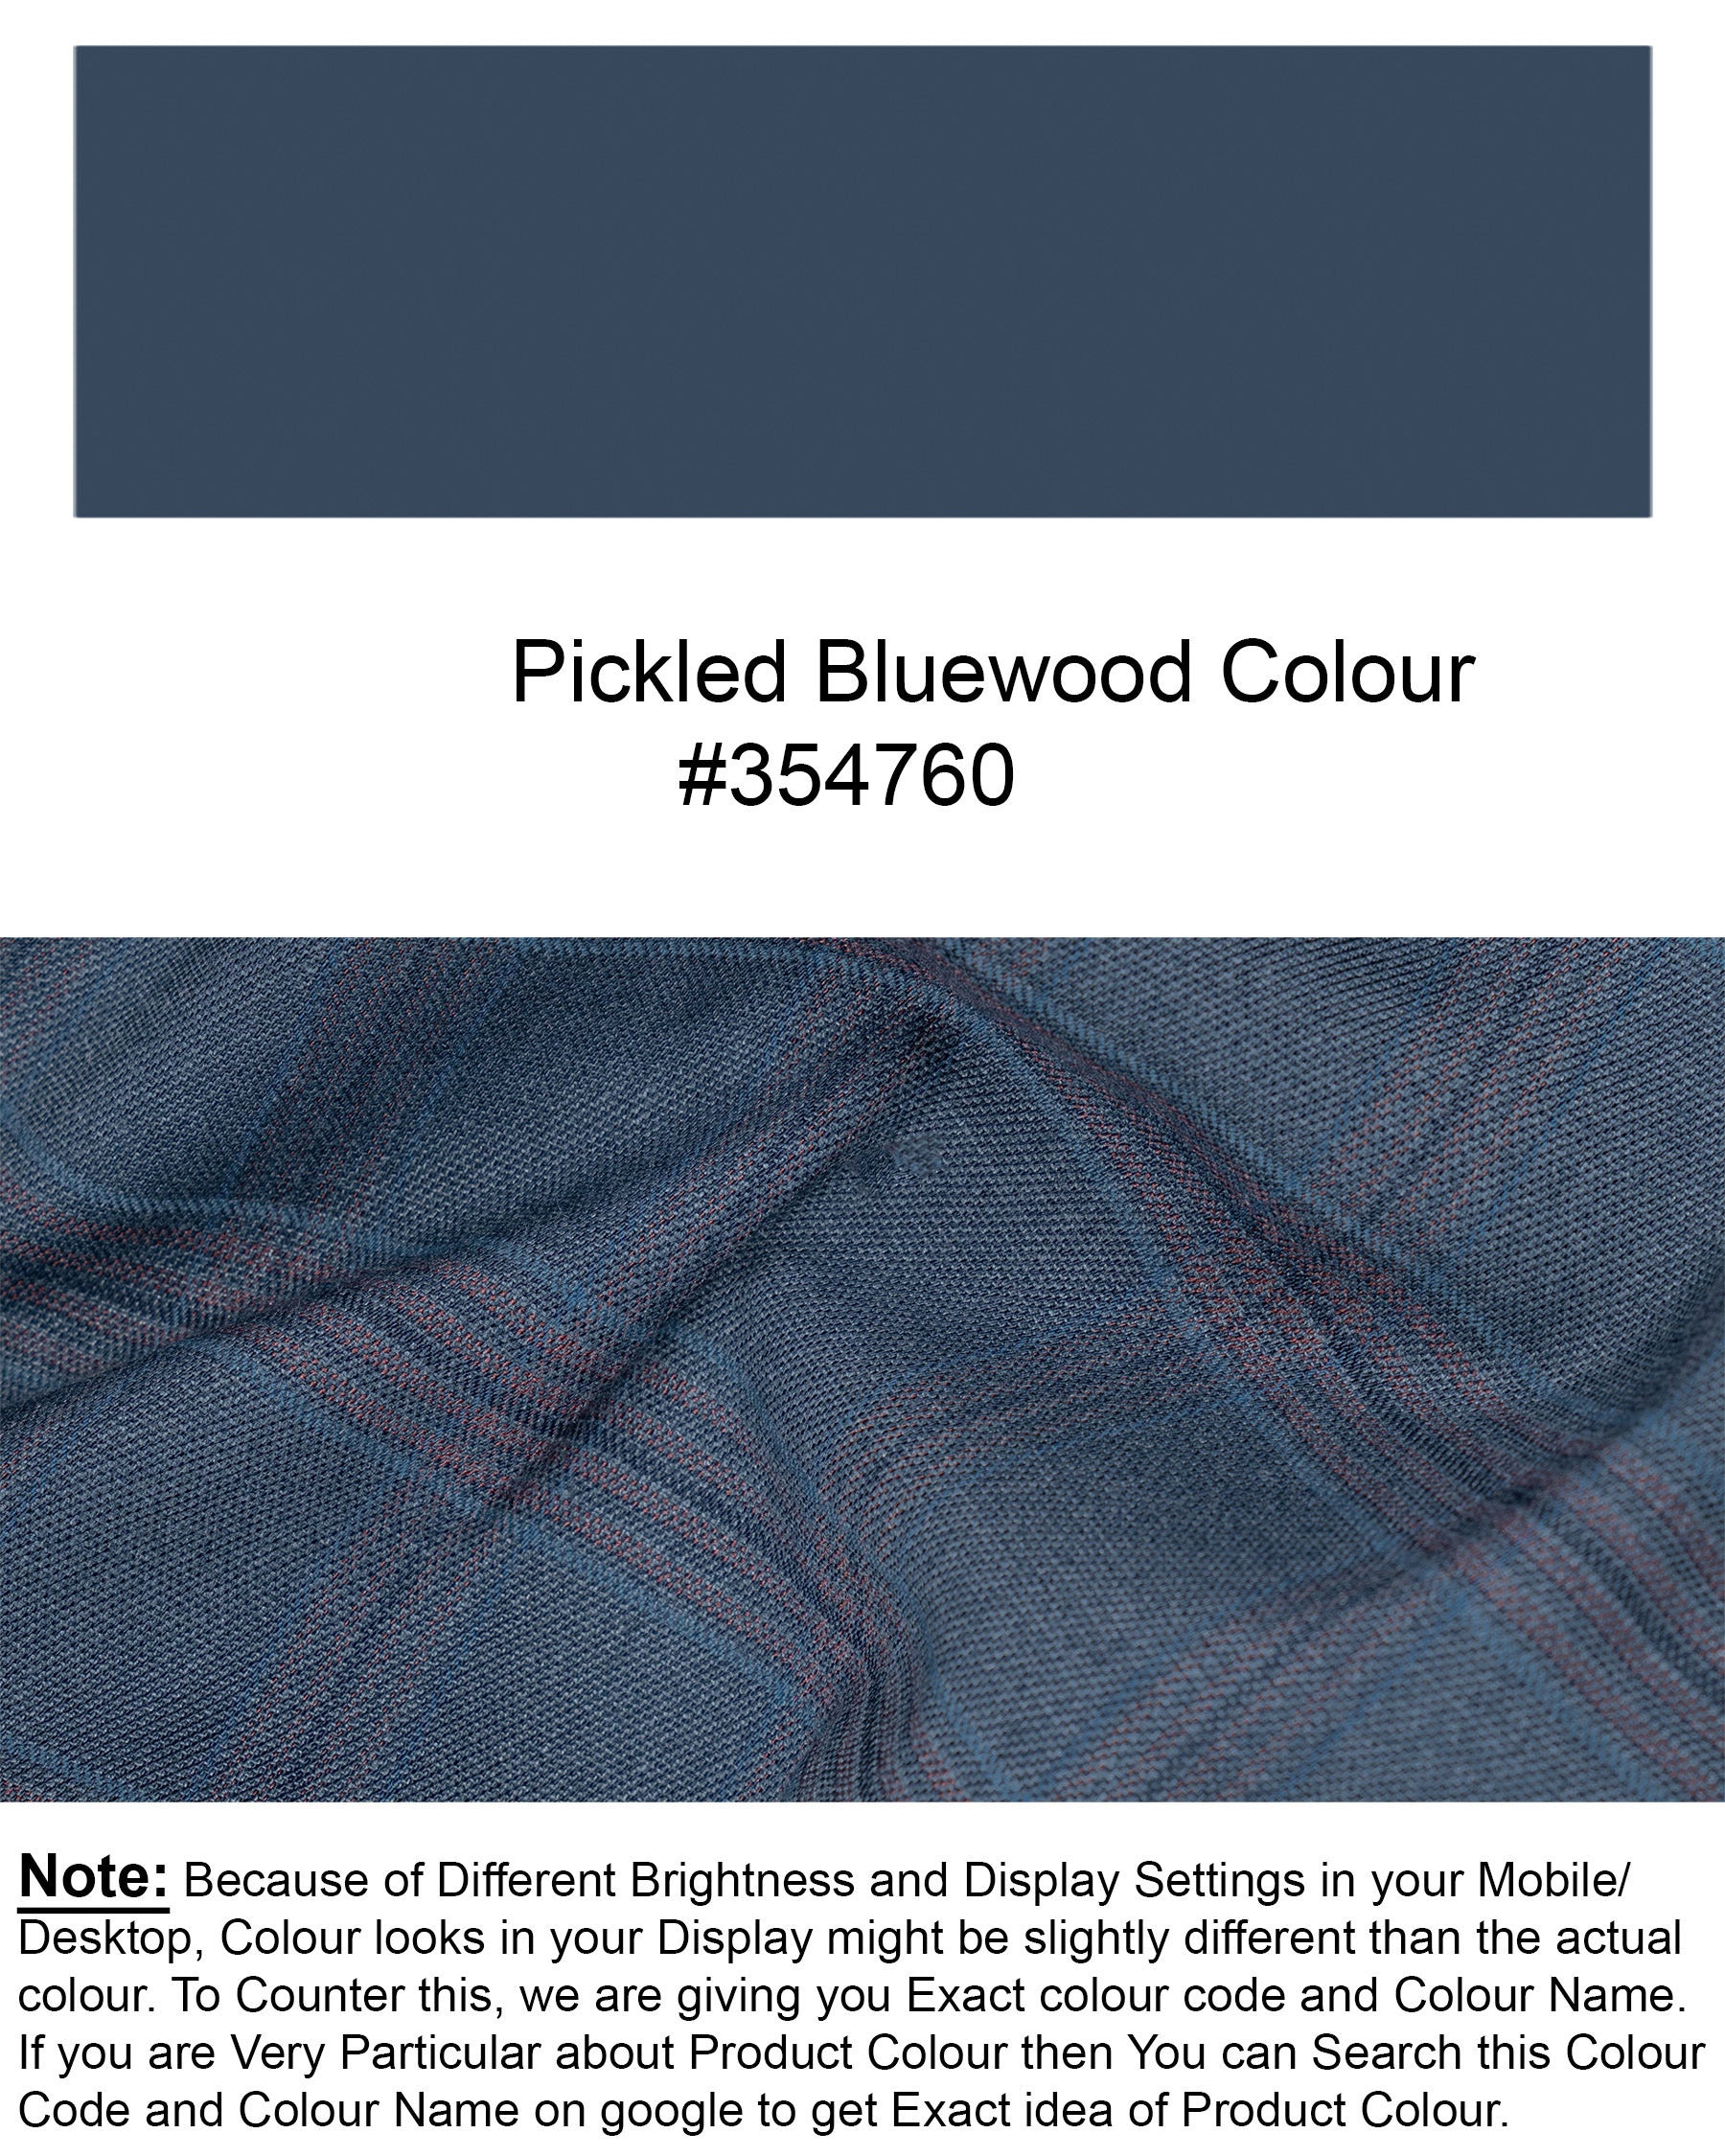 Pickled Bluewood Super fine Checkered Double Breasted Woolrich Blazer BL1626-DB-2B-36, BL1626-DB-2B-38, BL1626-DB-2B-40, BL1626-DB-2B-42, BL1626-DB-2B-44, BL1626-DB-2B-46, BL1626-DB-2B-48, BL1626-DB-2B-50, BL1626-DB-2B-52, BL1626-DB-2B-54, BL1626-DB-2B-56, BL1626-DB-2B-58, BL1626-DB-2B-60